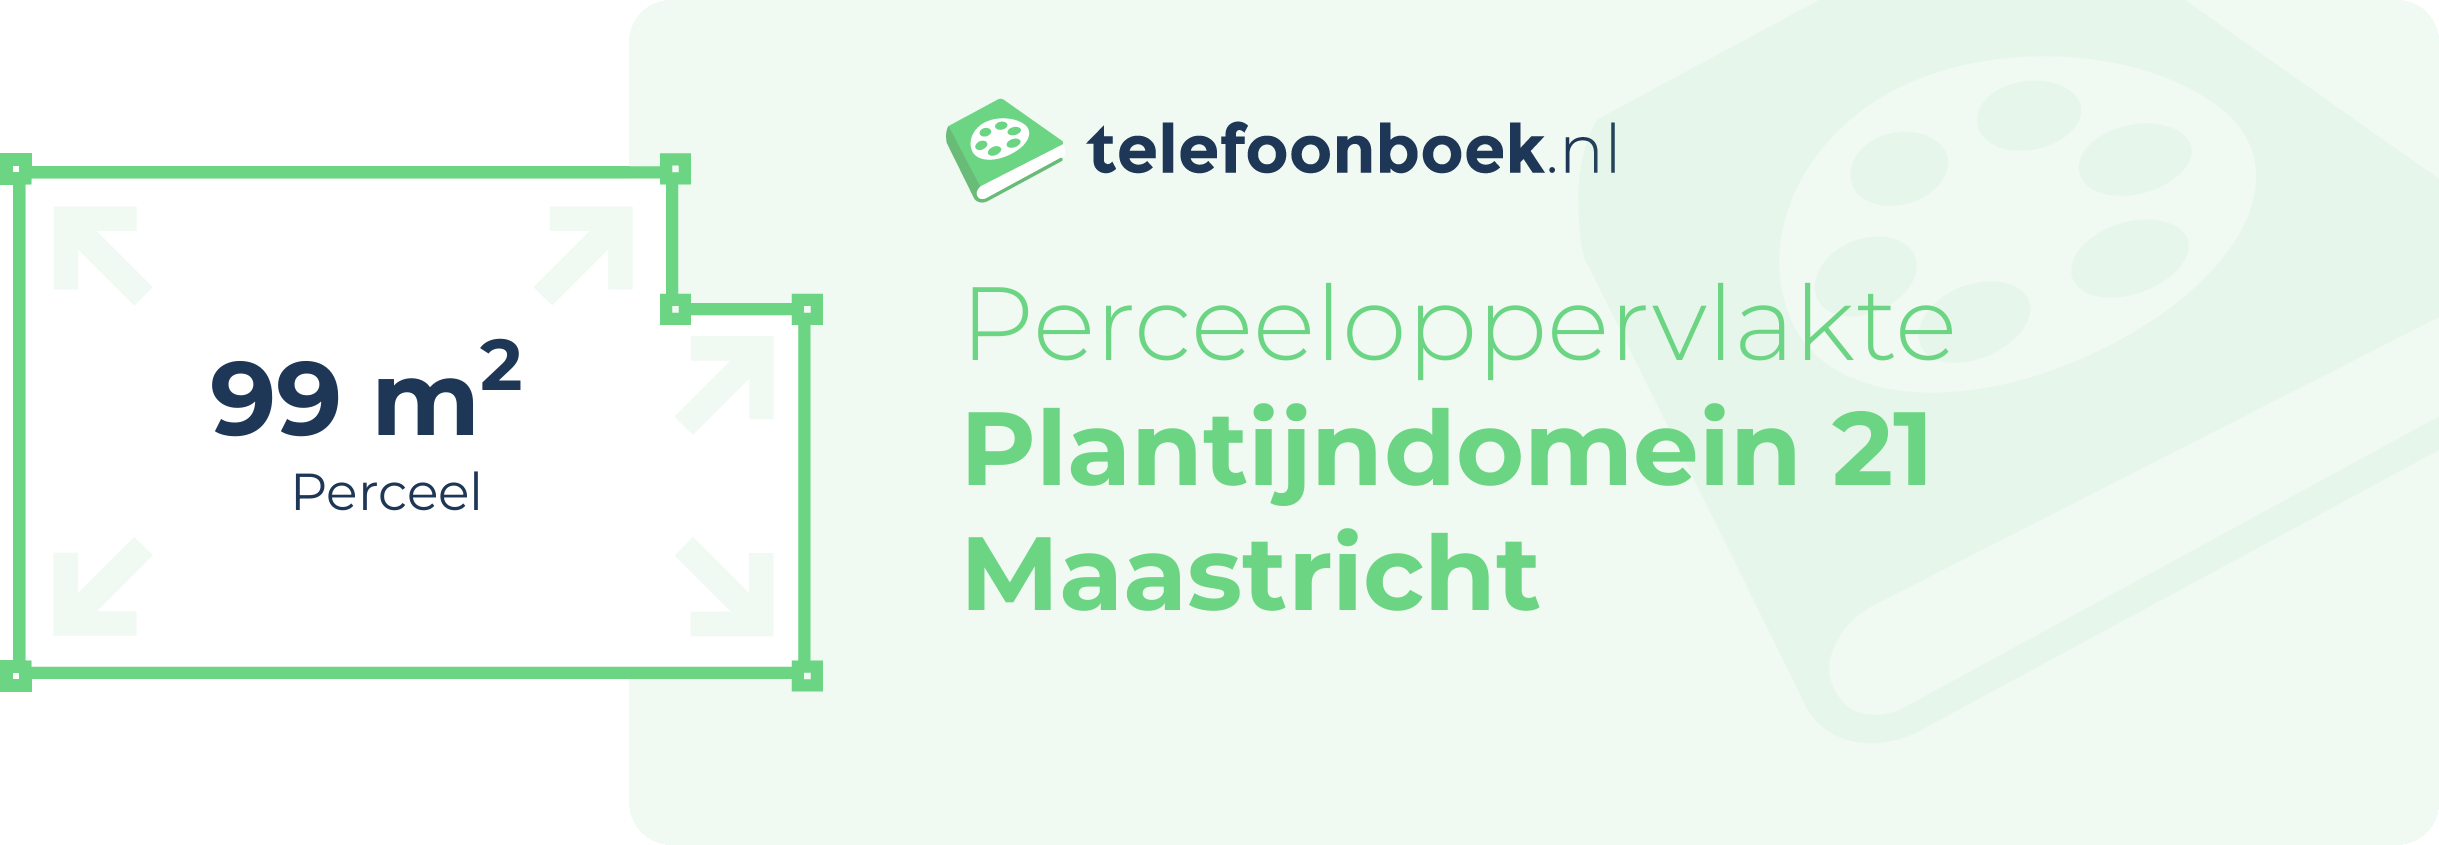 Perceeloppervlakte Plantijndomein 21 Maastricht